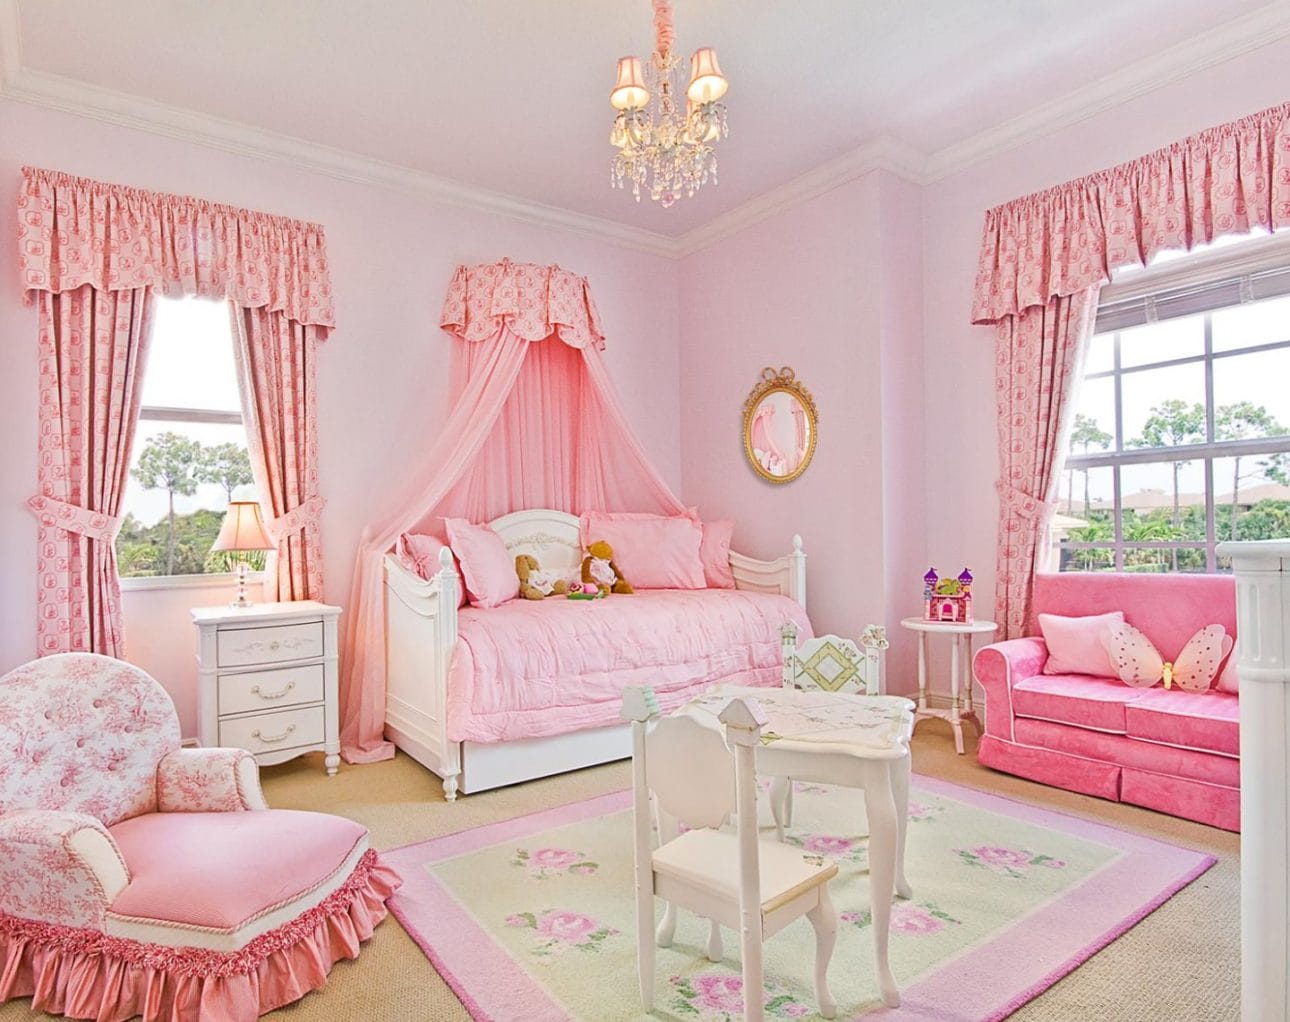 All-Pink Princess Bedroom Ideas